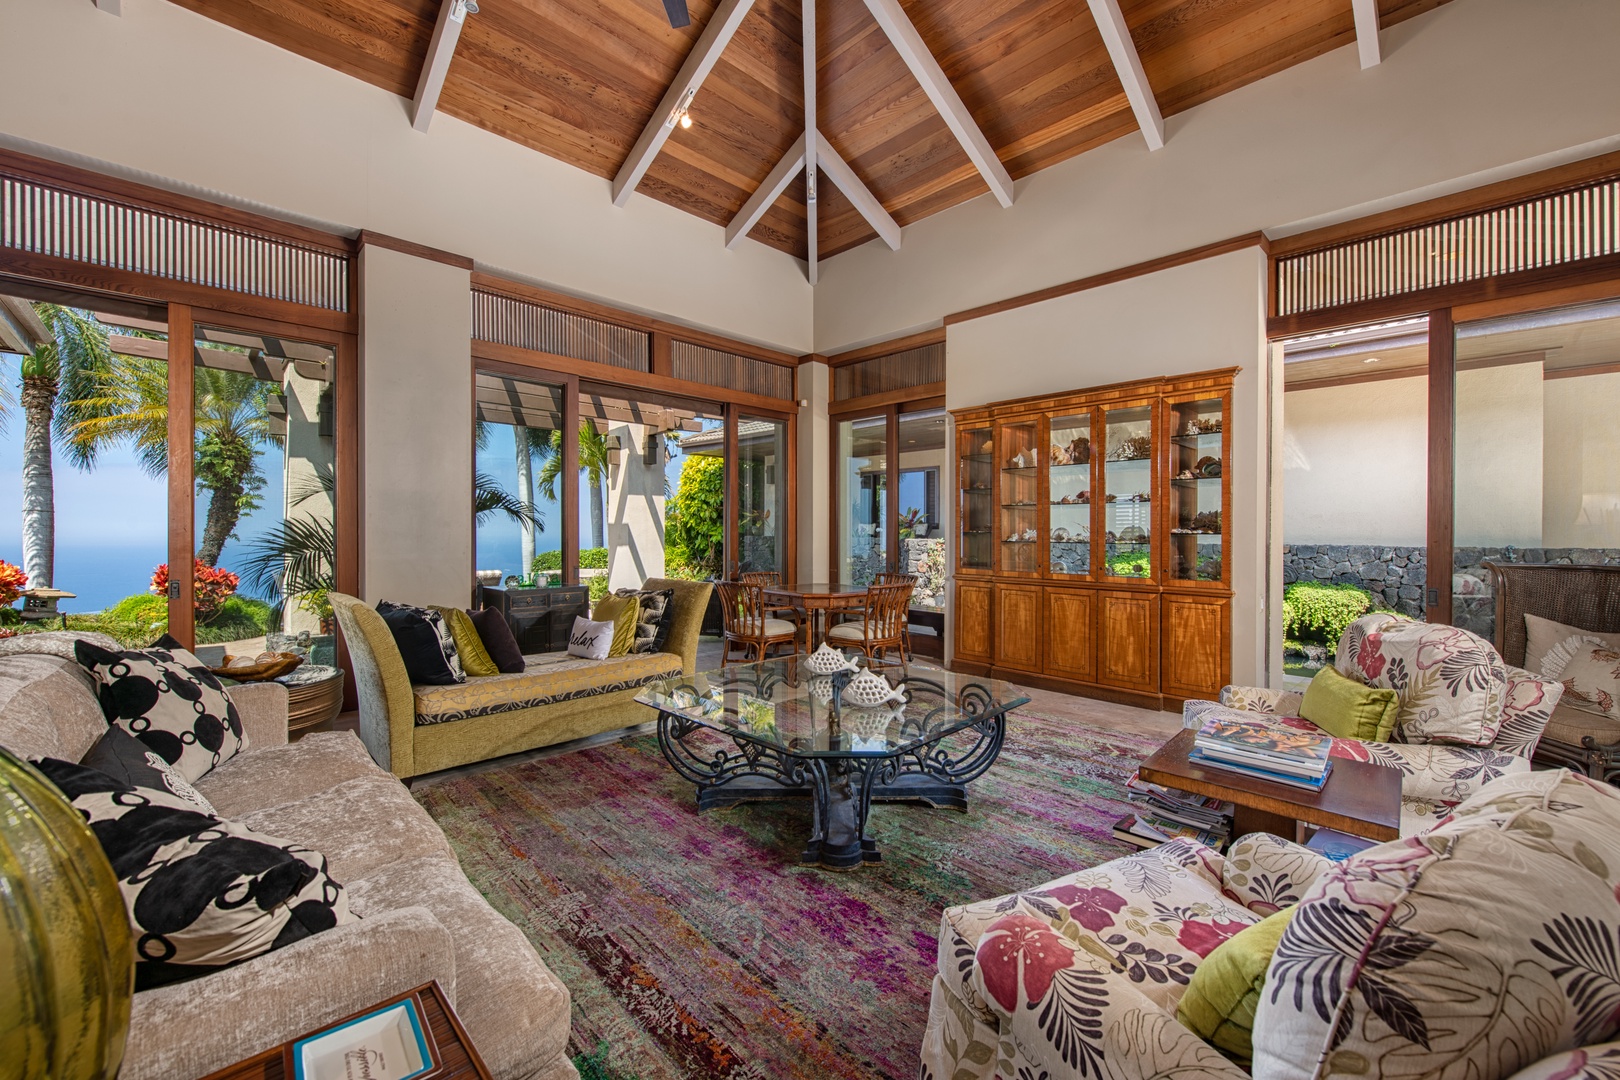 Kailua Kona Vacation Rentals, Hale Wailele** - 18-foot vaulted ceilings and an open floor plan